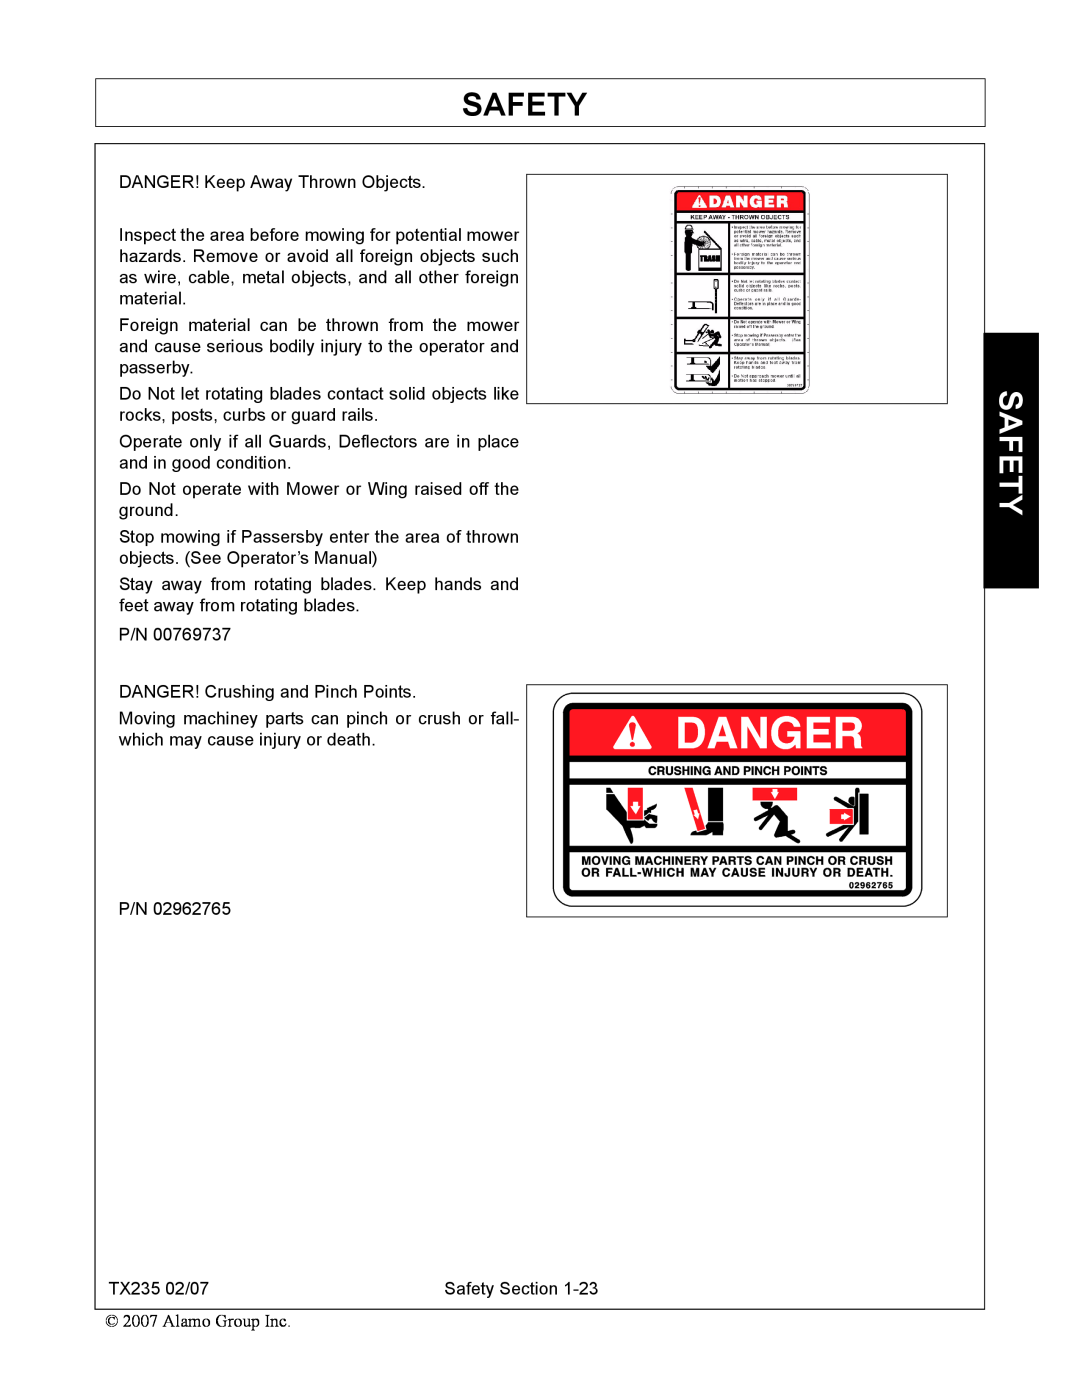 Alamo TX235 manual Safety 